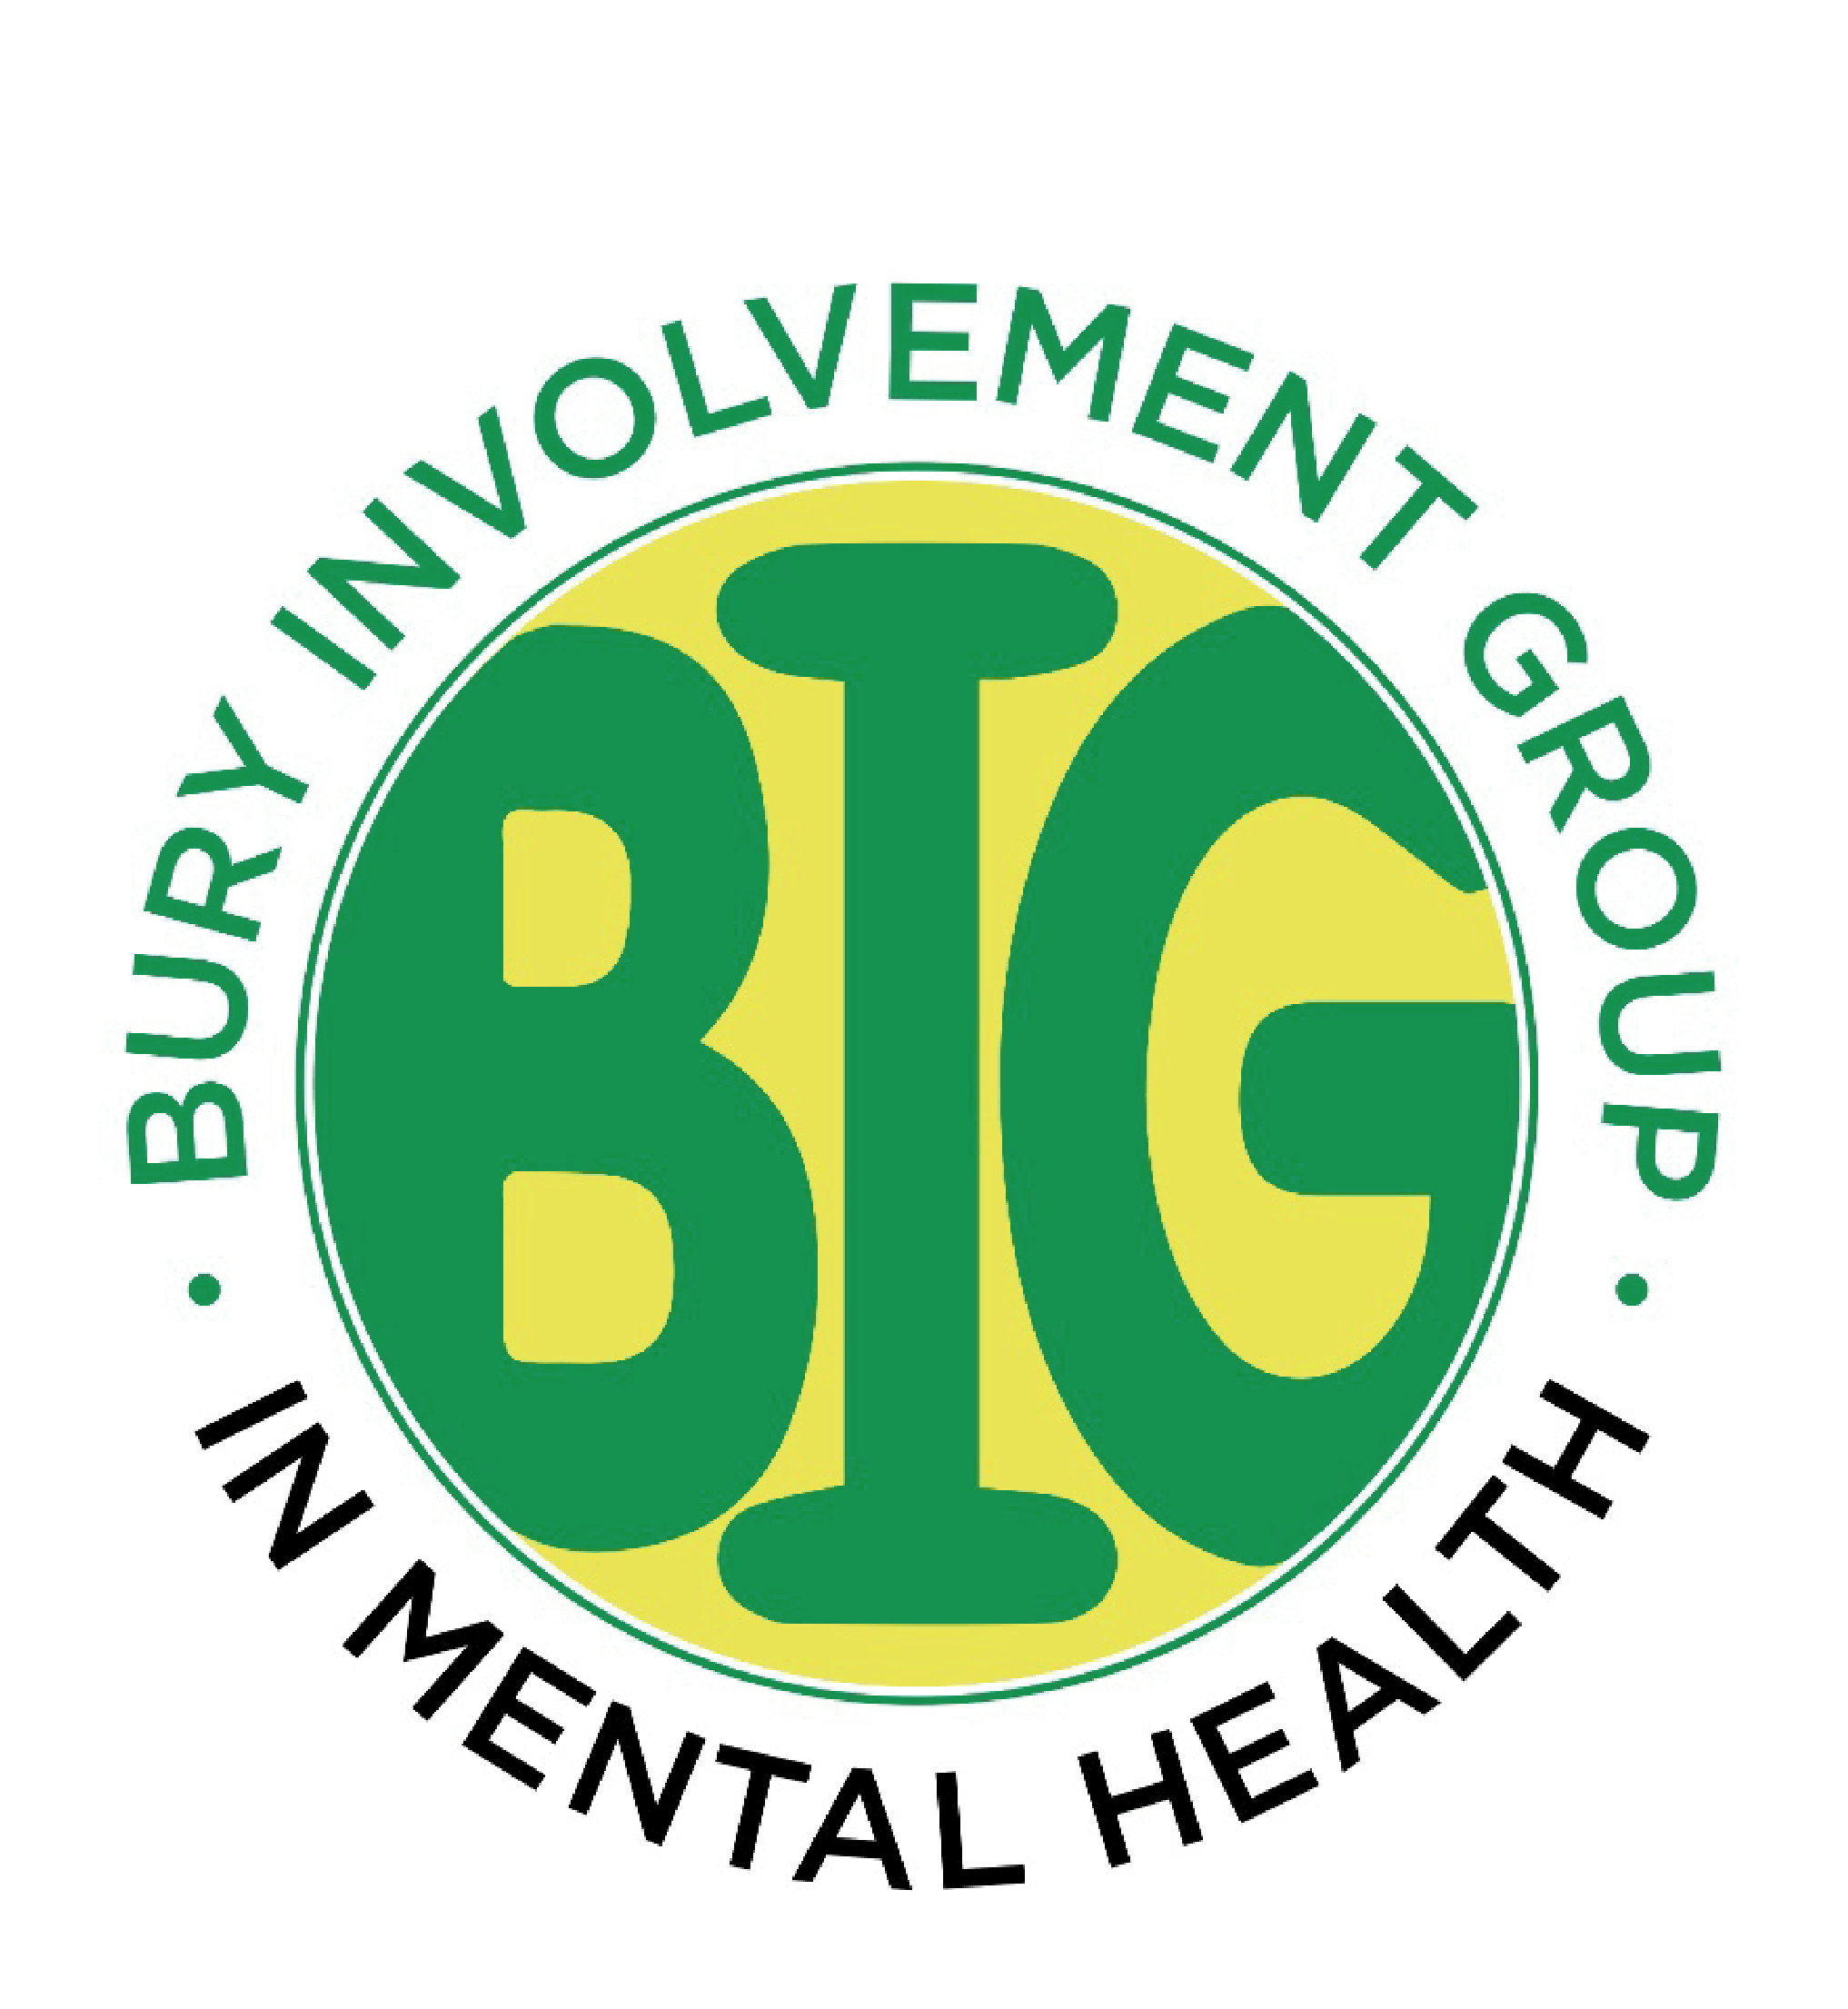 Bury Involvement Group - BIG in mental health